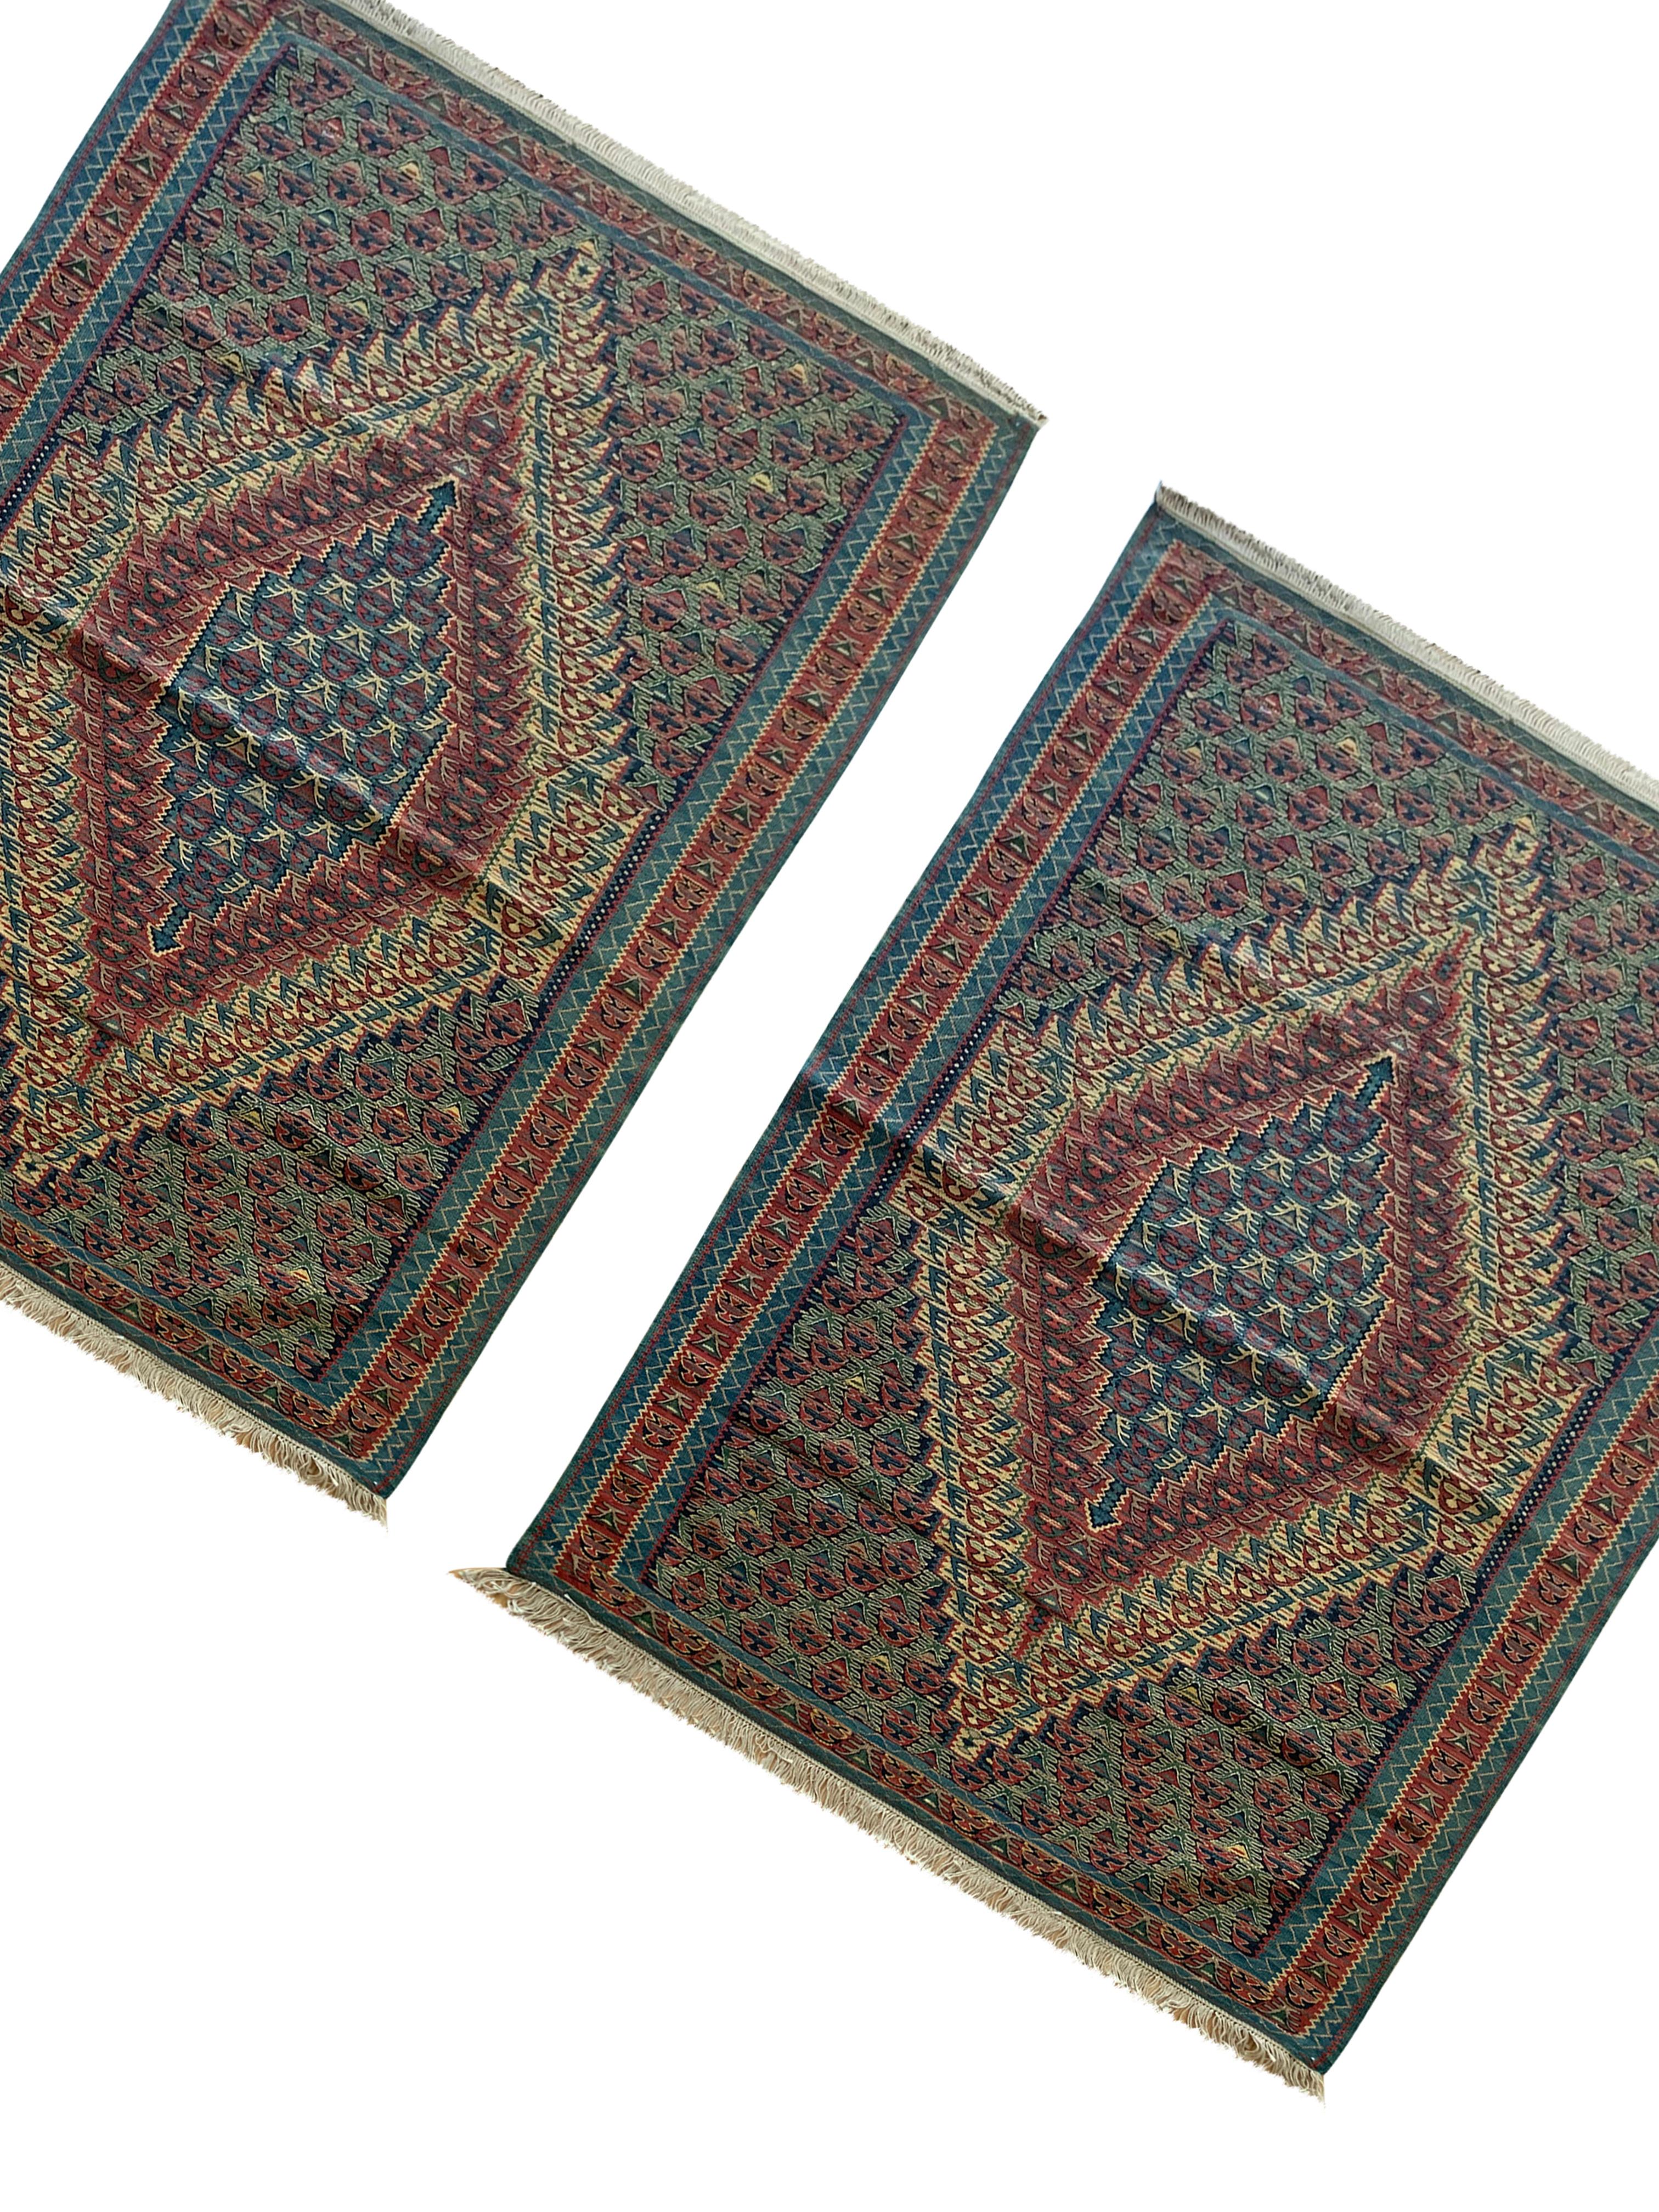 Blue Kurdish Kilim Rugs Pair of Handmade Flatwoven Wool Rugs For Sale 5